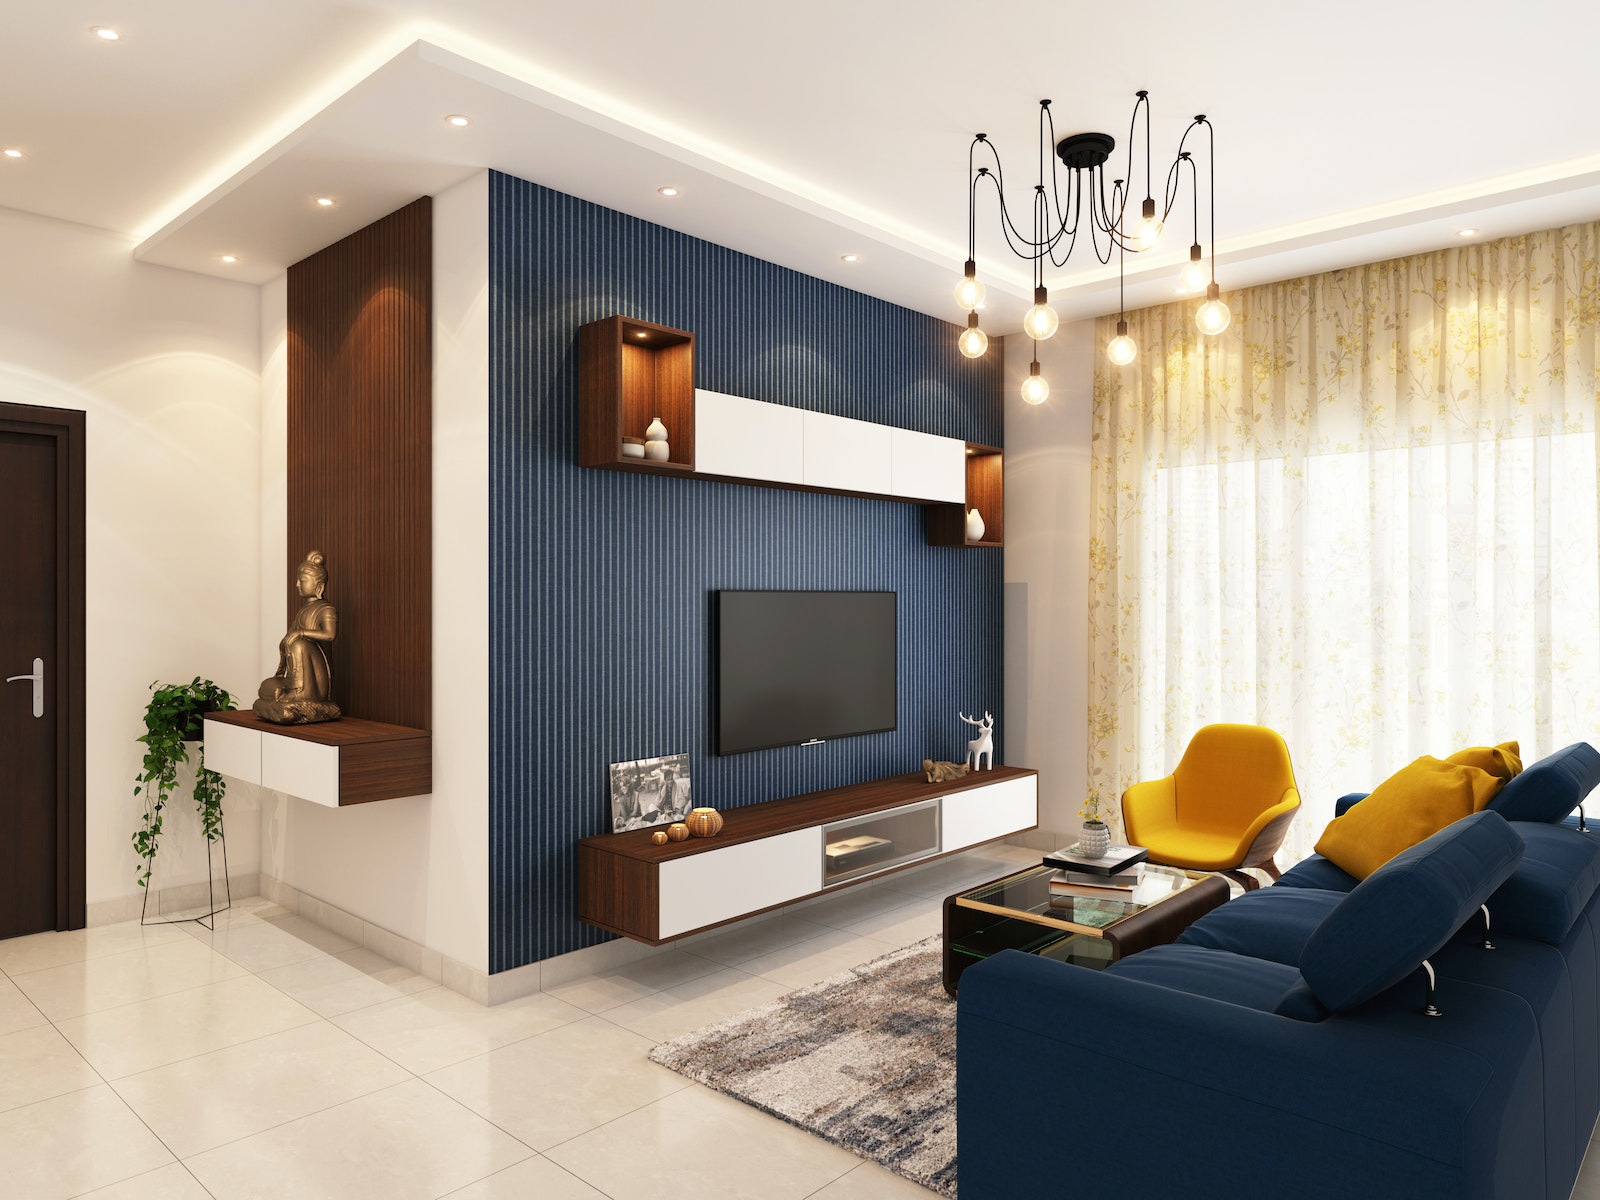 luxury furniture bedroom